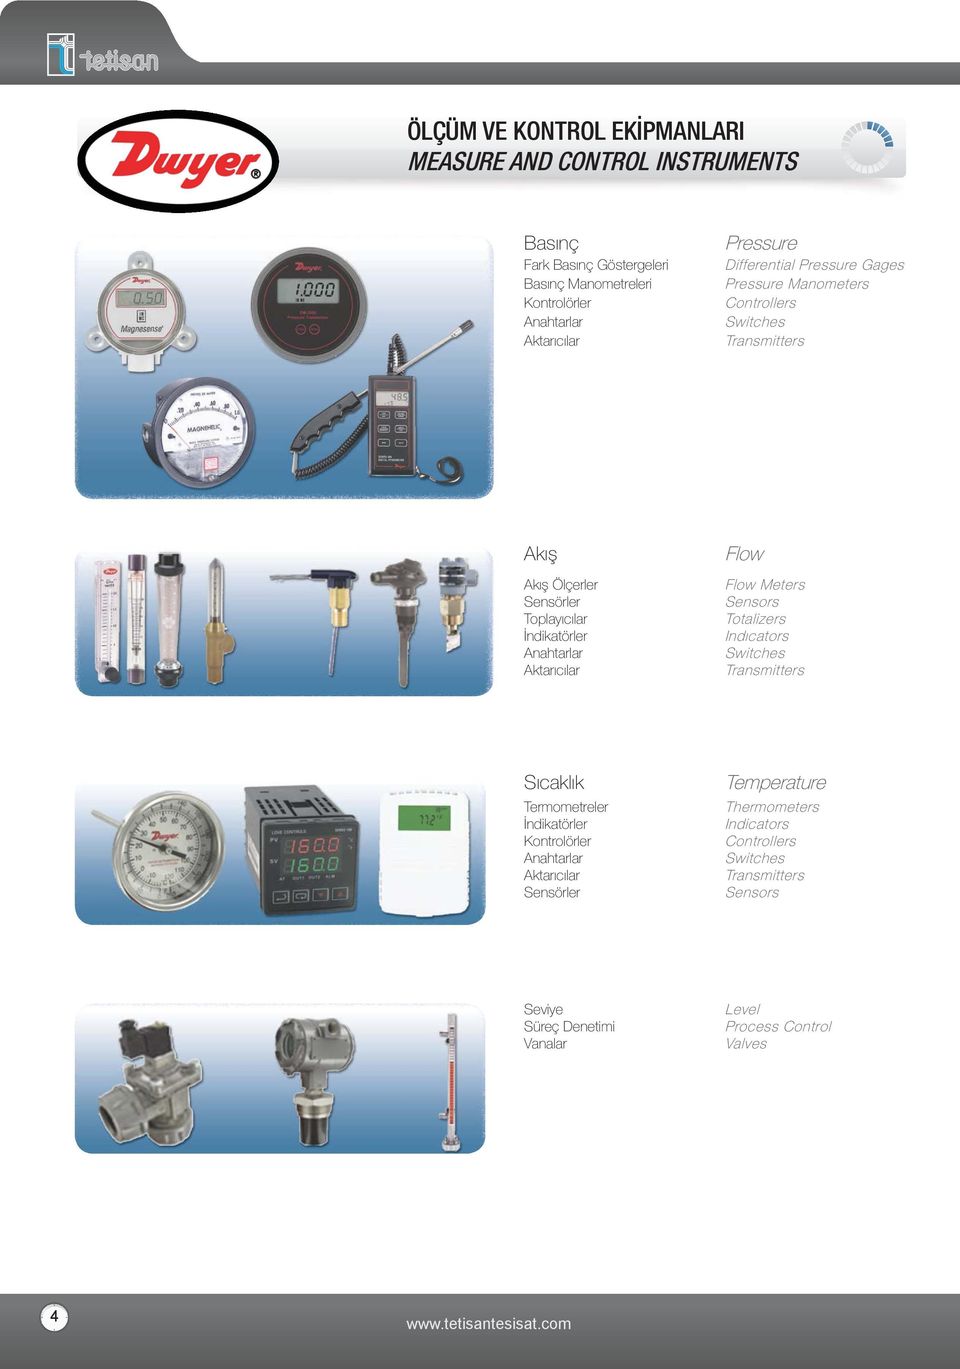 Anahtarlar Aktarıcılar Flow Flow Meters Sensors Totalizers Indıcators Switches Transmitters Sıcaklık Termometreler İndikatörler Kontrolörler Anahtarlar